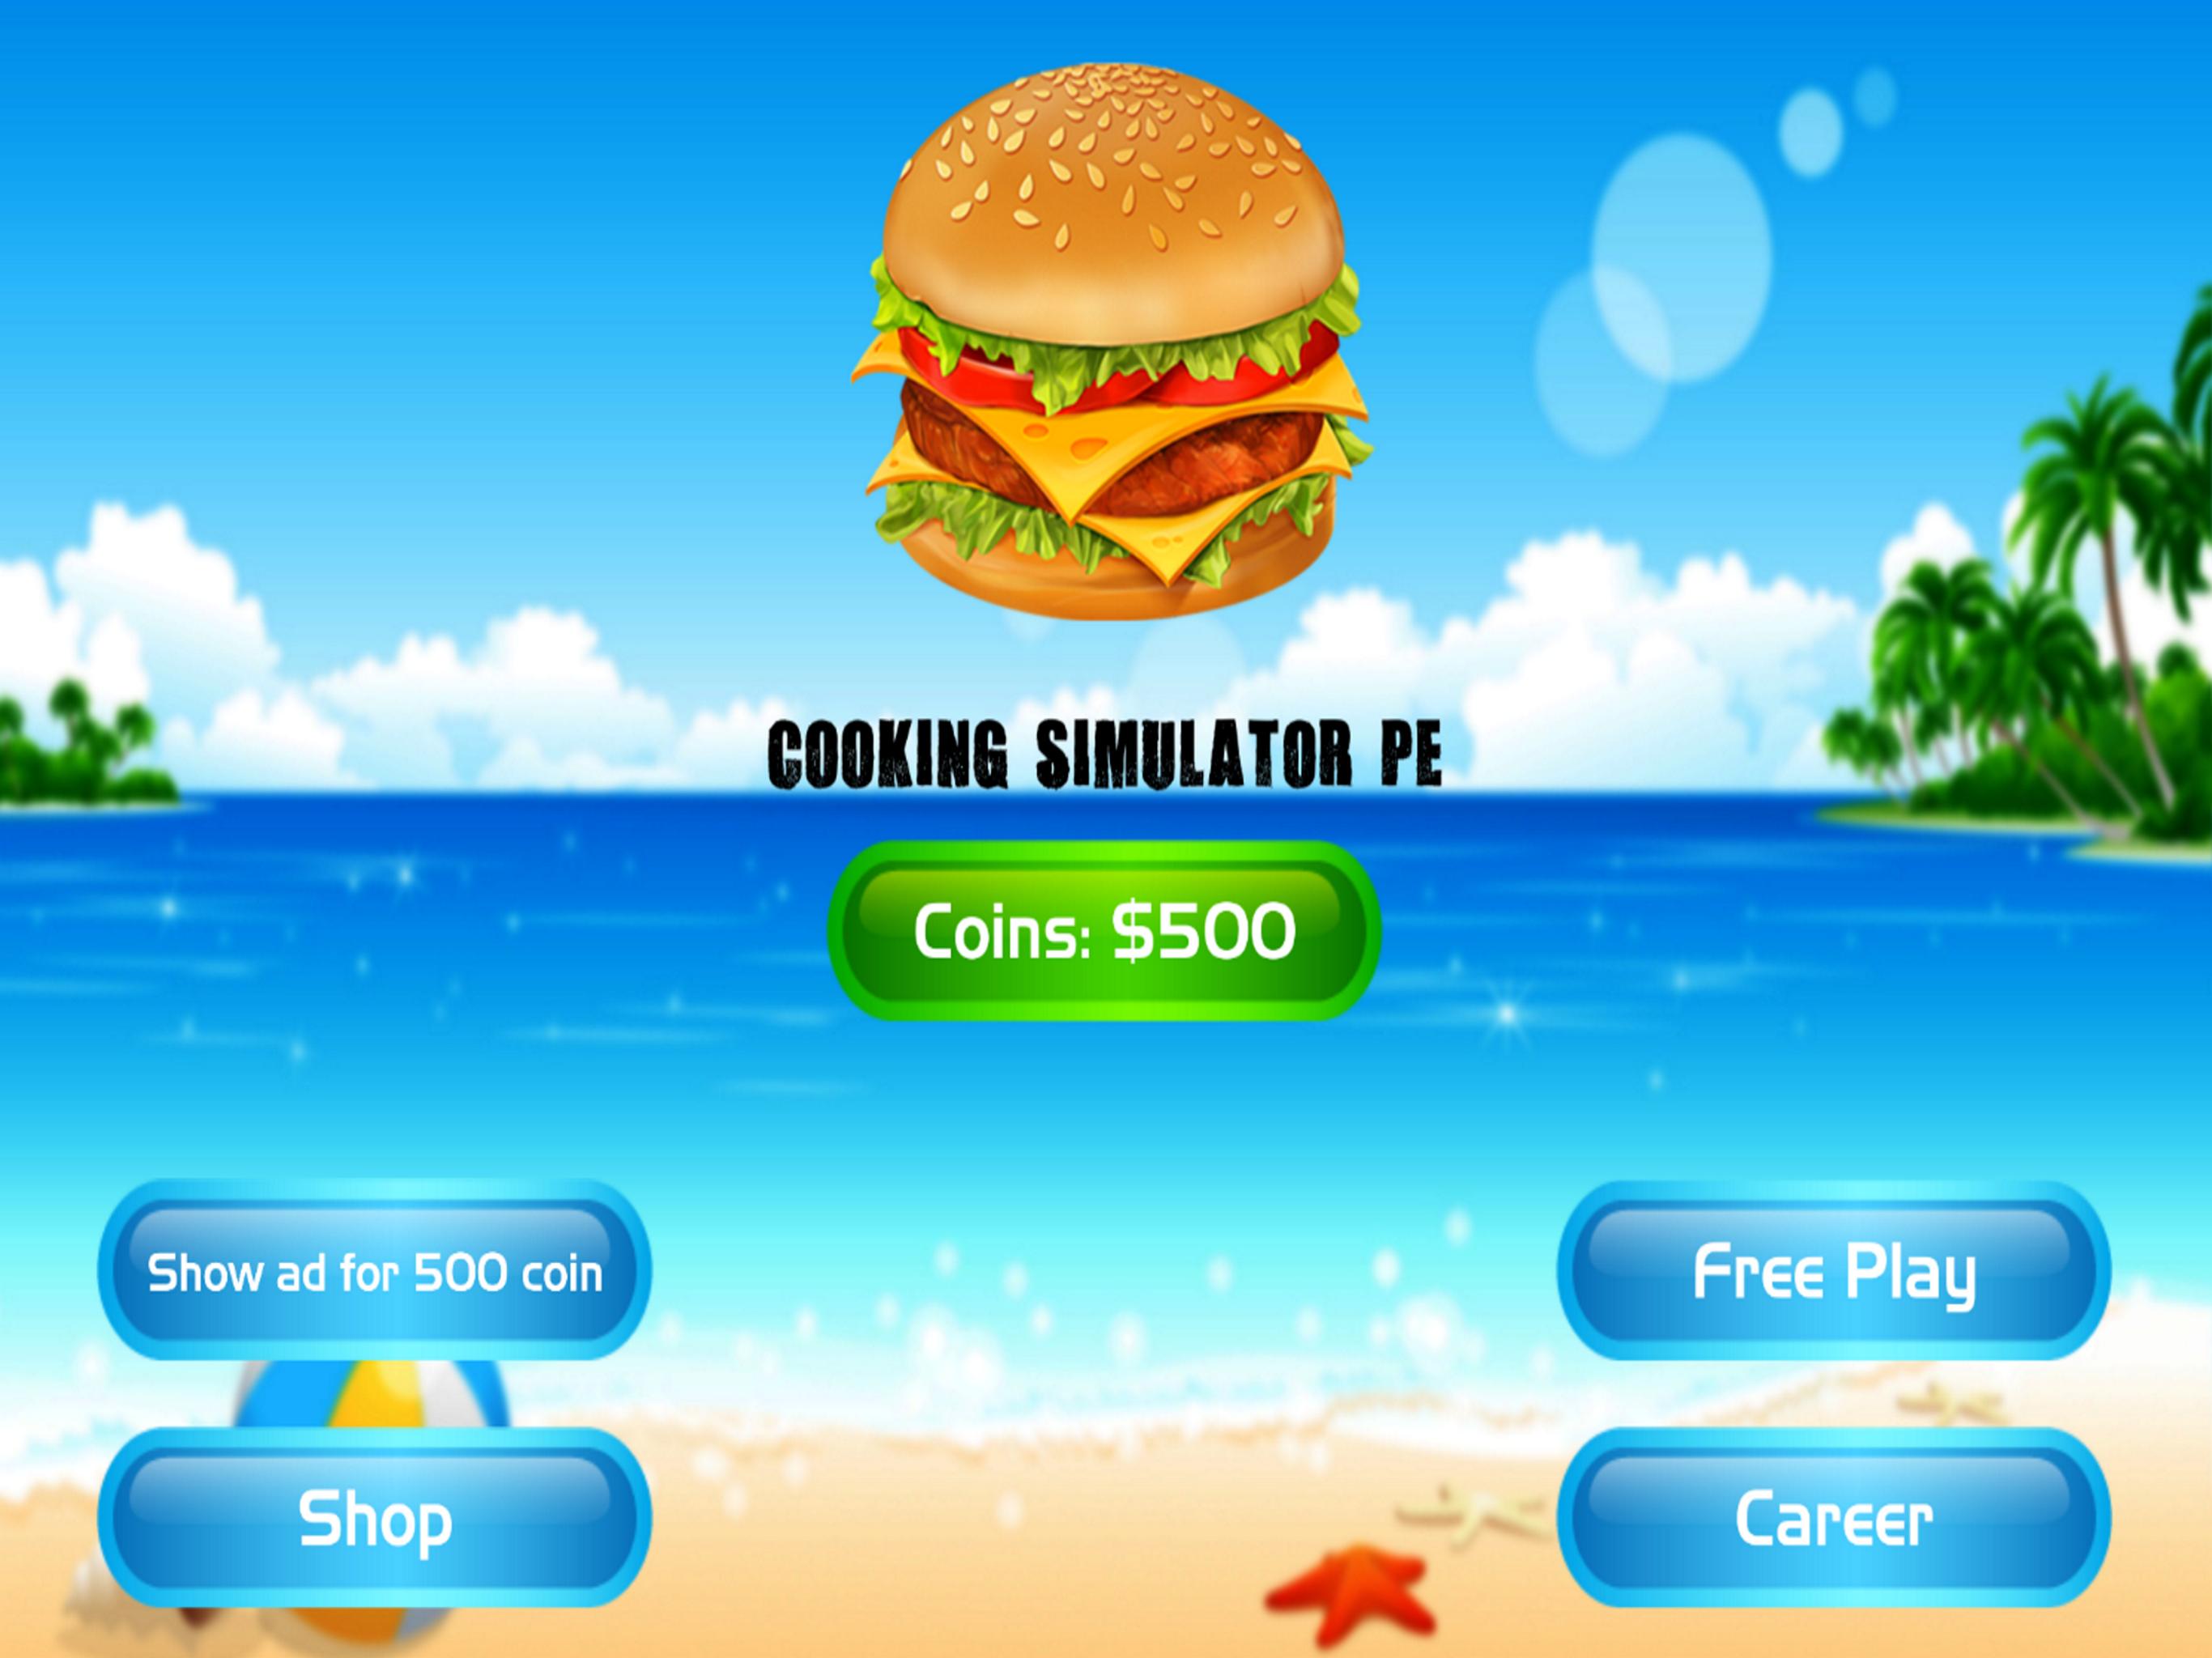 Restaurant Simula Kitchen Tips Jeetx - x3 cheeseburger simulator roblox